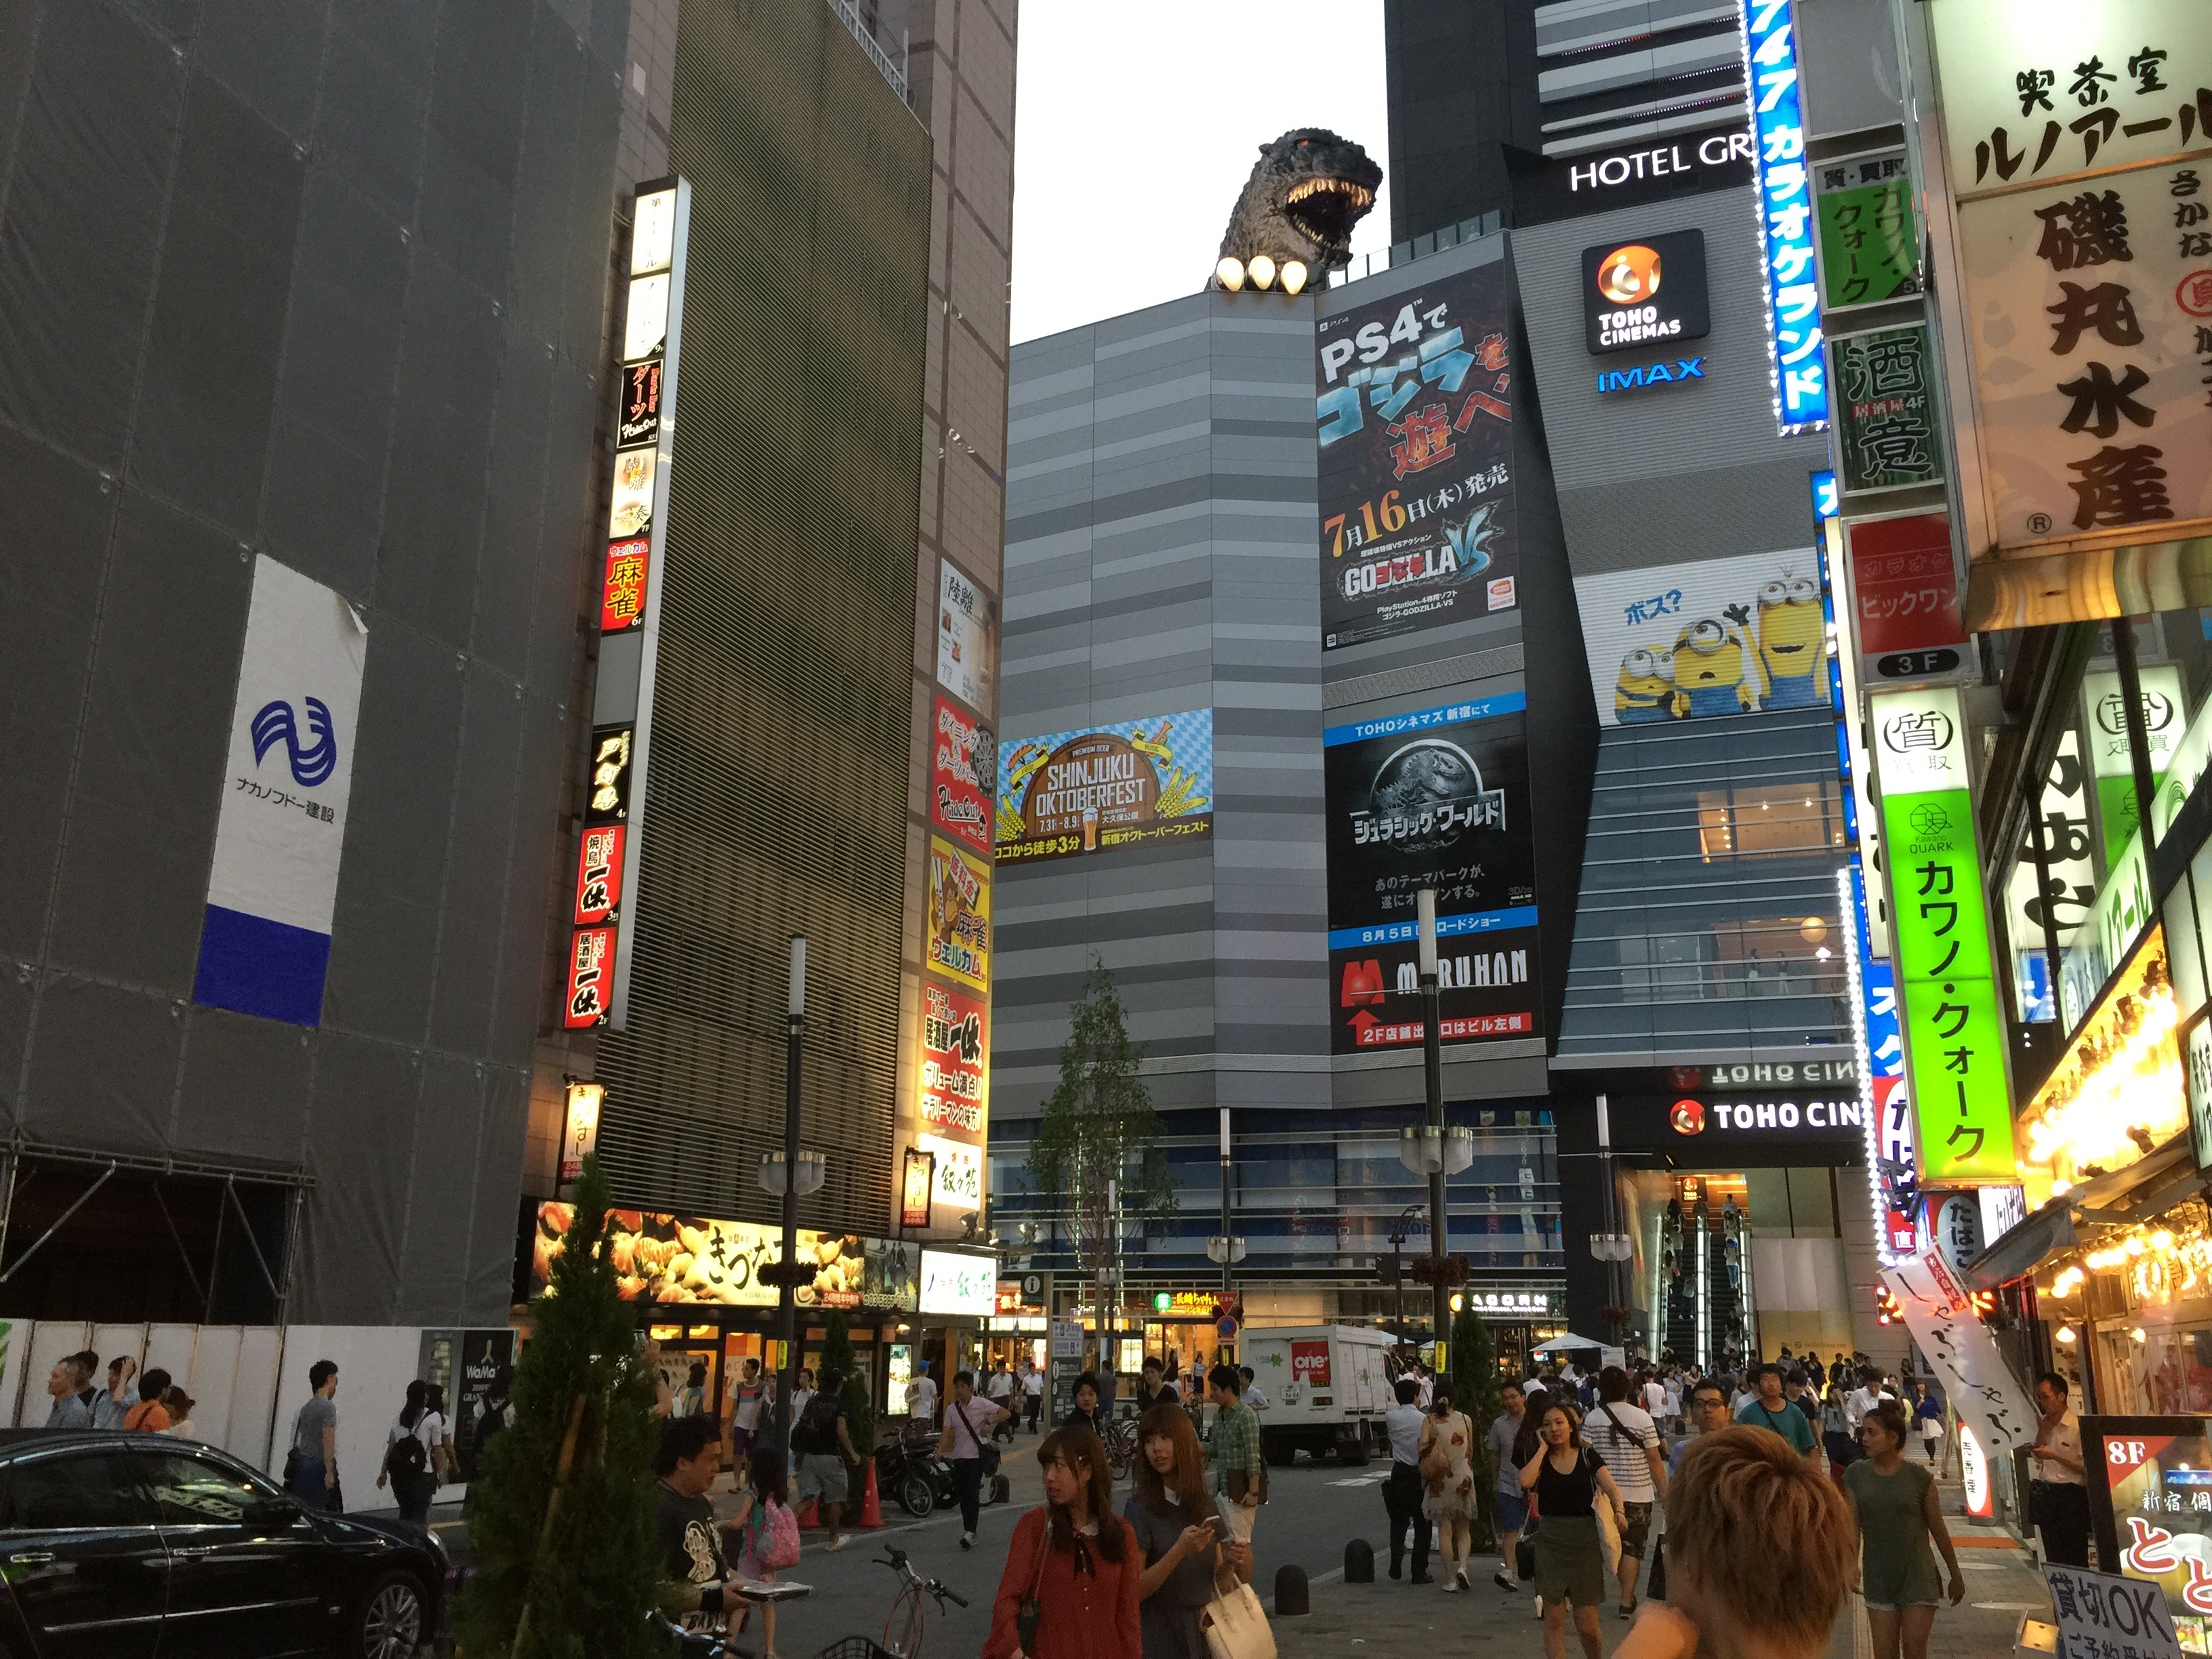 Where Should You Stay In Japan - Gozilla, Shinjuku, Tokyo